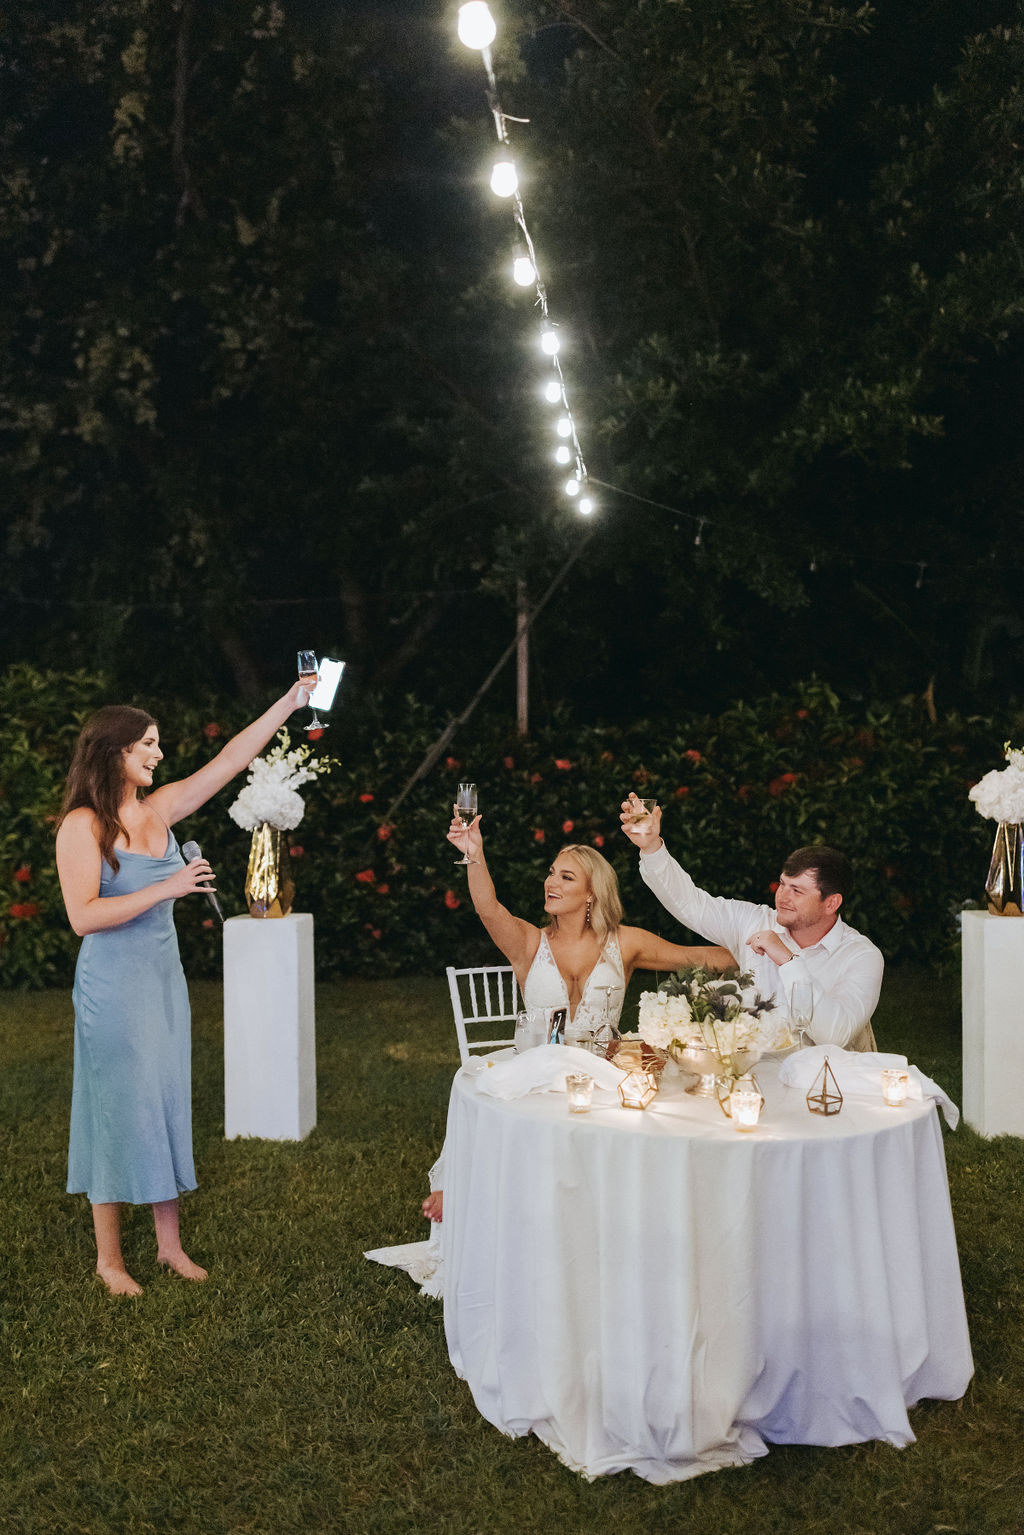 wedding toast to bride and groom